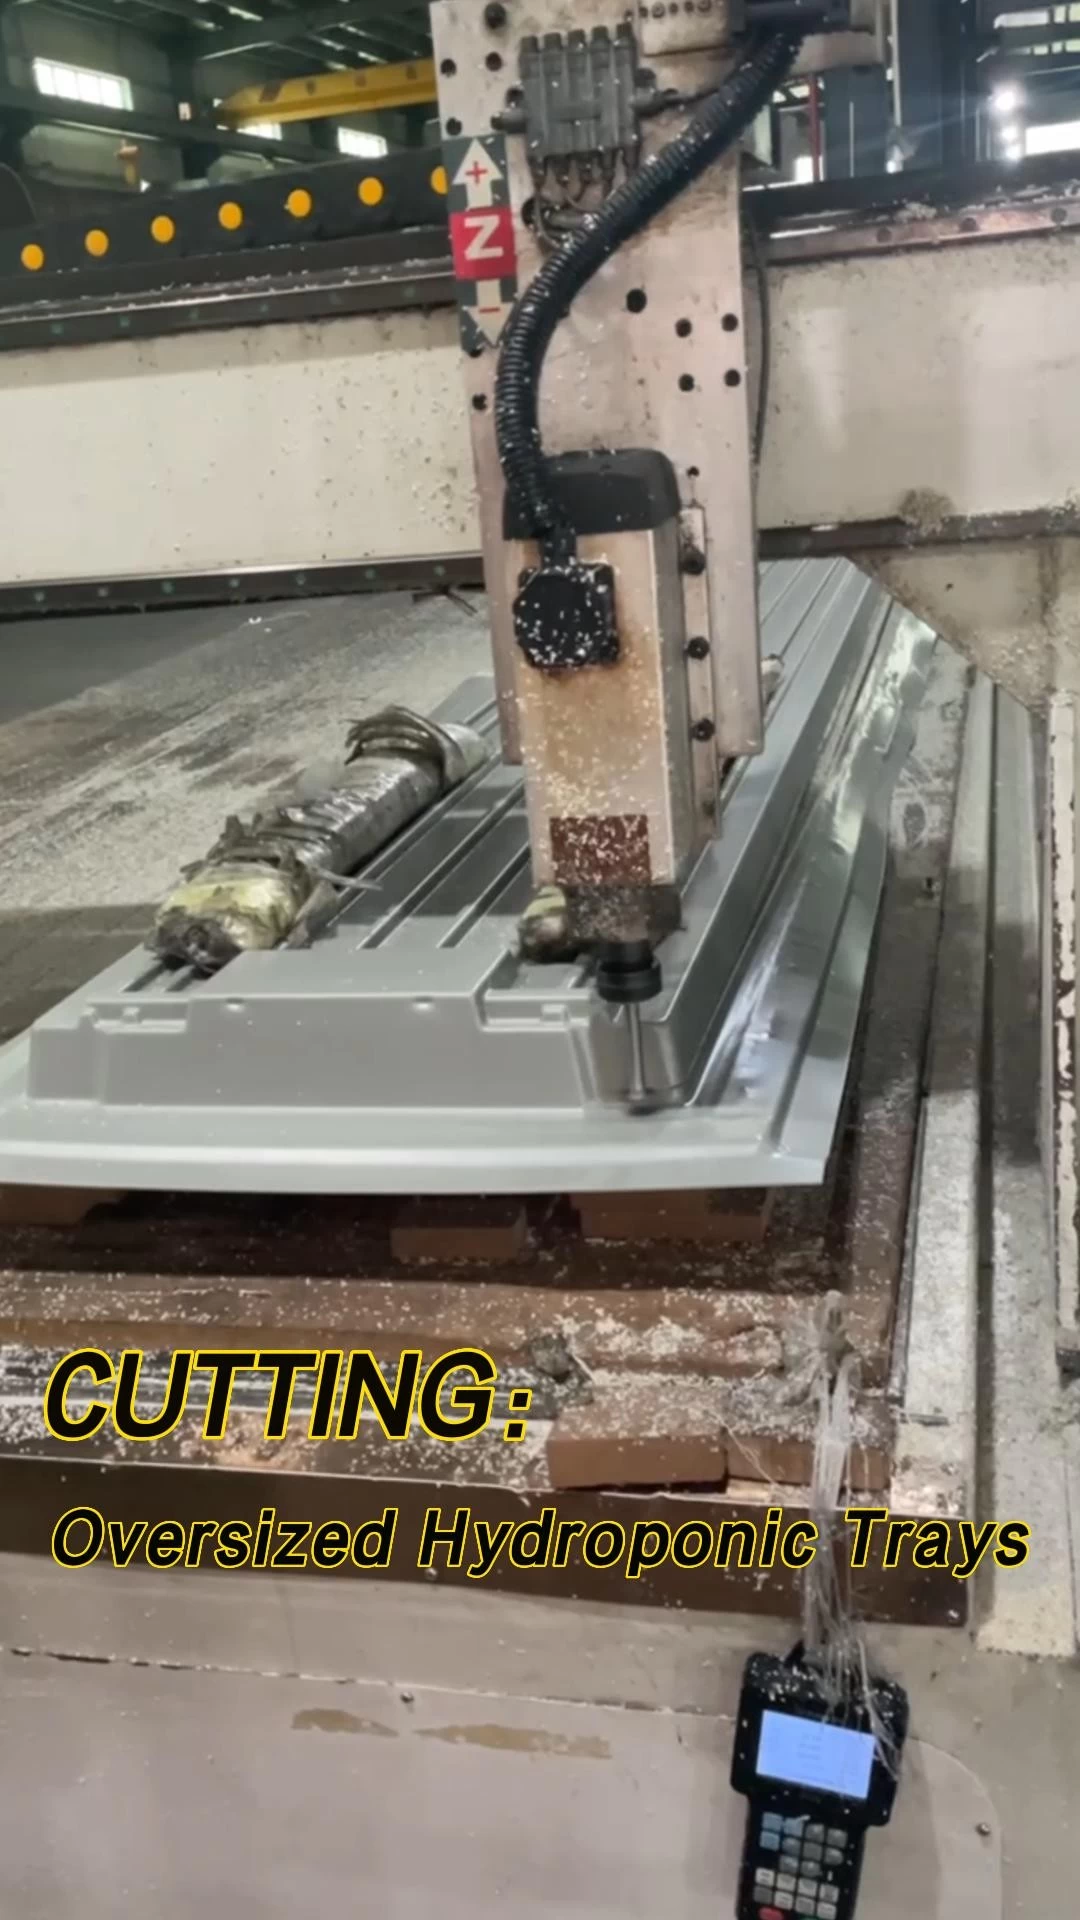 Cutting oversized hydroponic trays